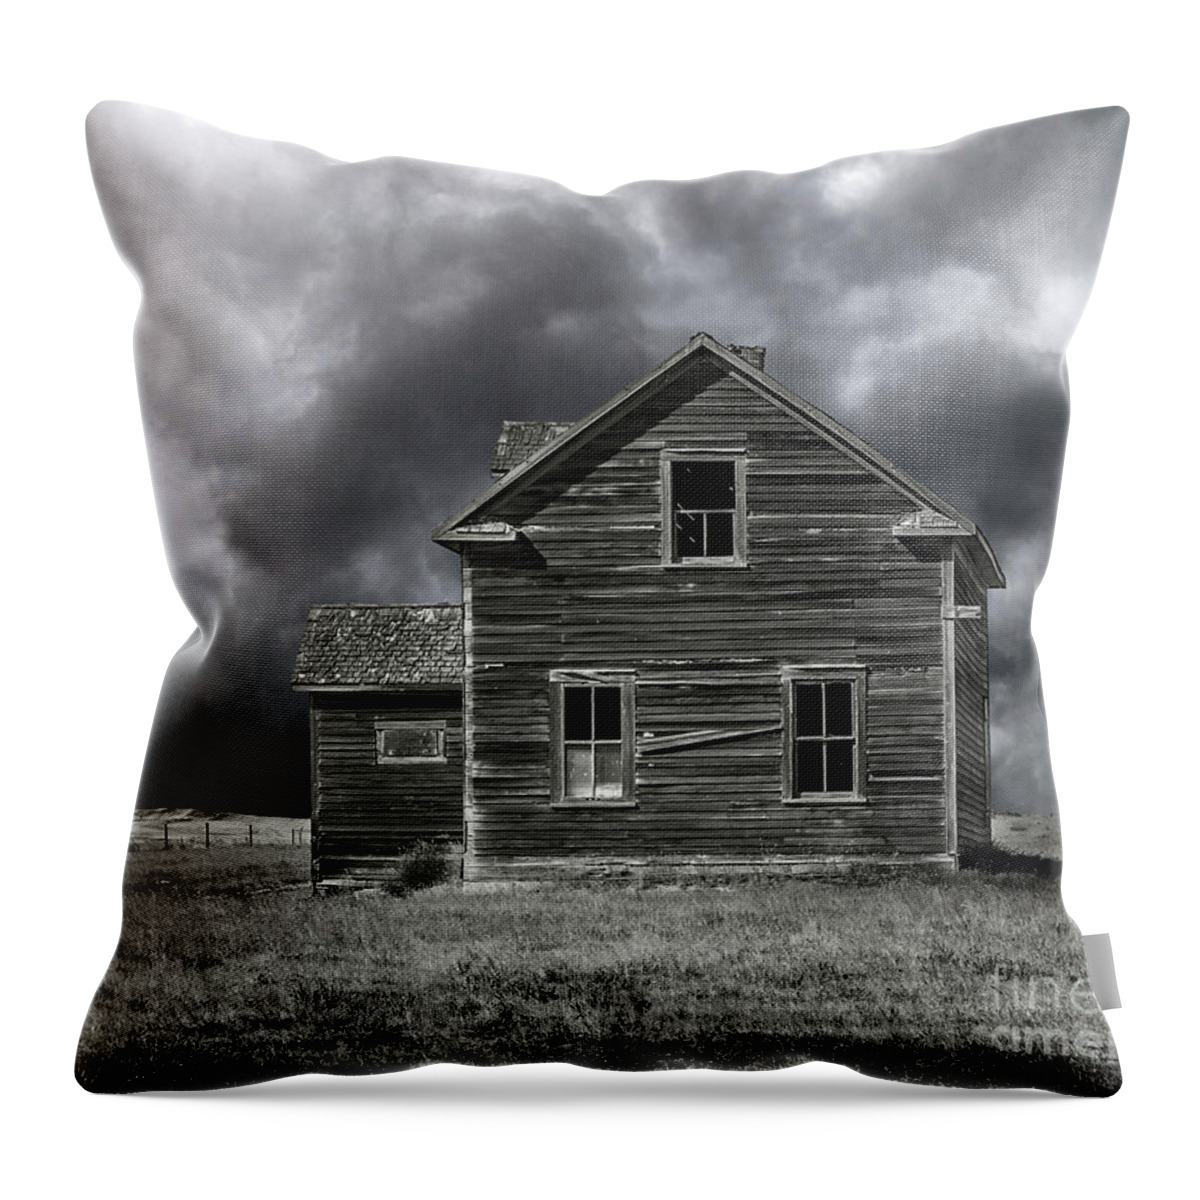  Dark Throw Pillow featuring the digital art Abandoned by Jim Hatch